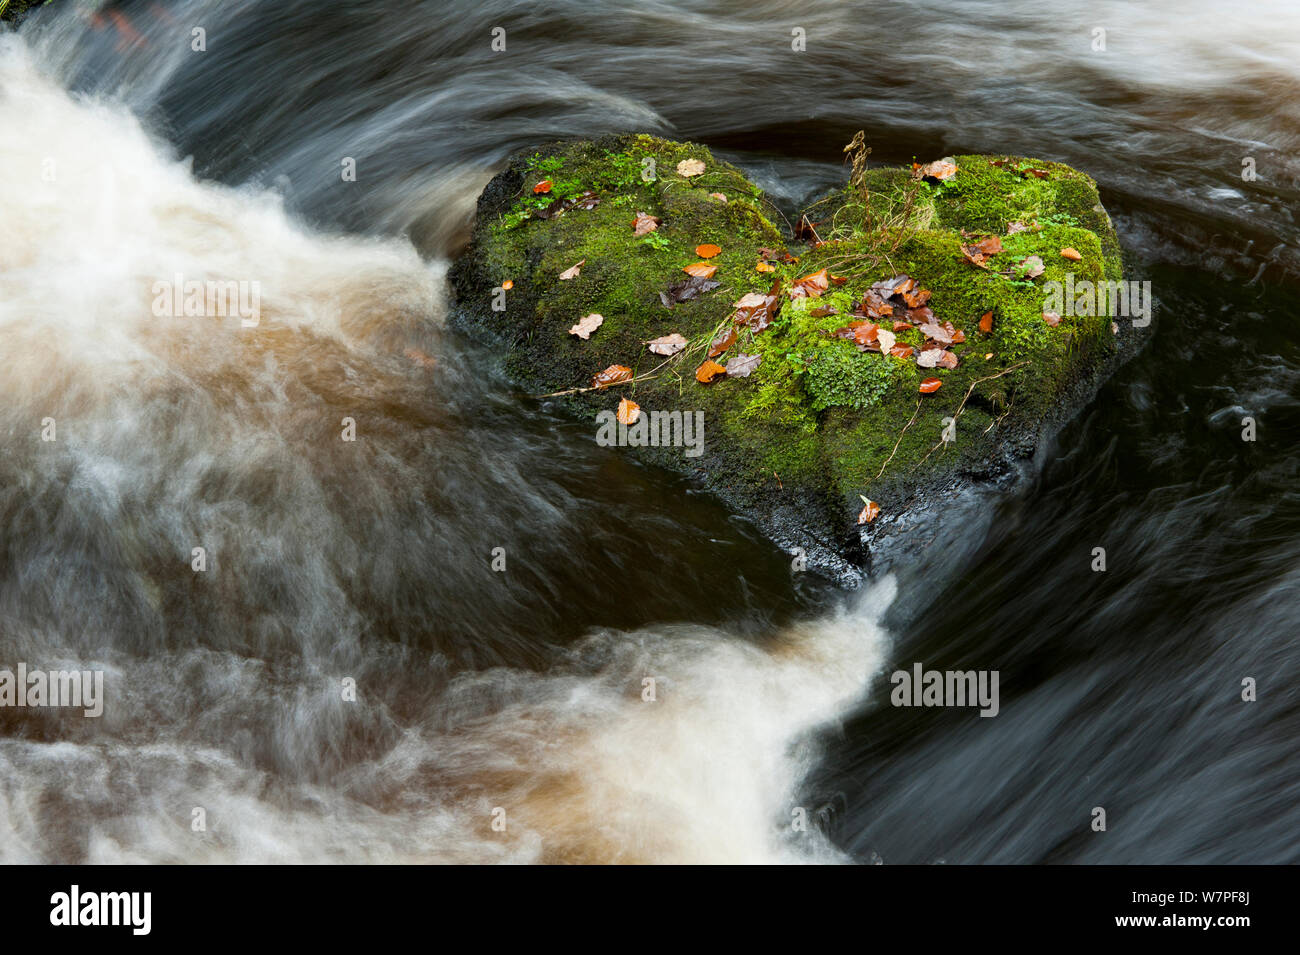 Heart-shaped mossy rock in fast flowing river, Craigengillan Estate, Dalmellington, Ayrshire, October. Stock Photo